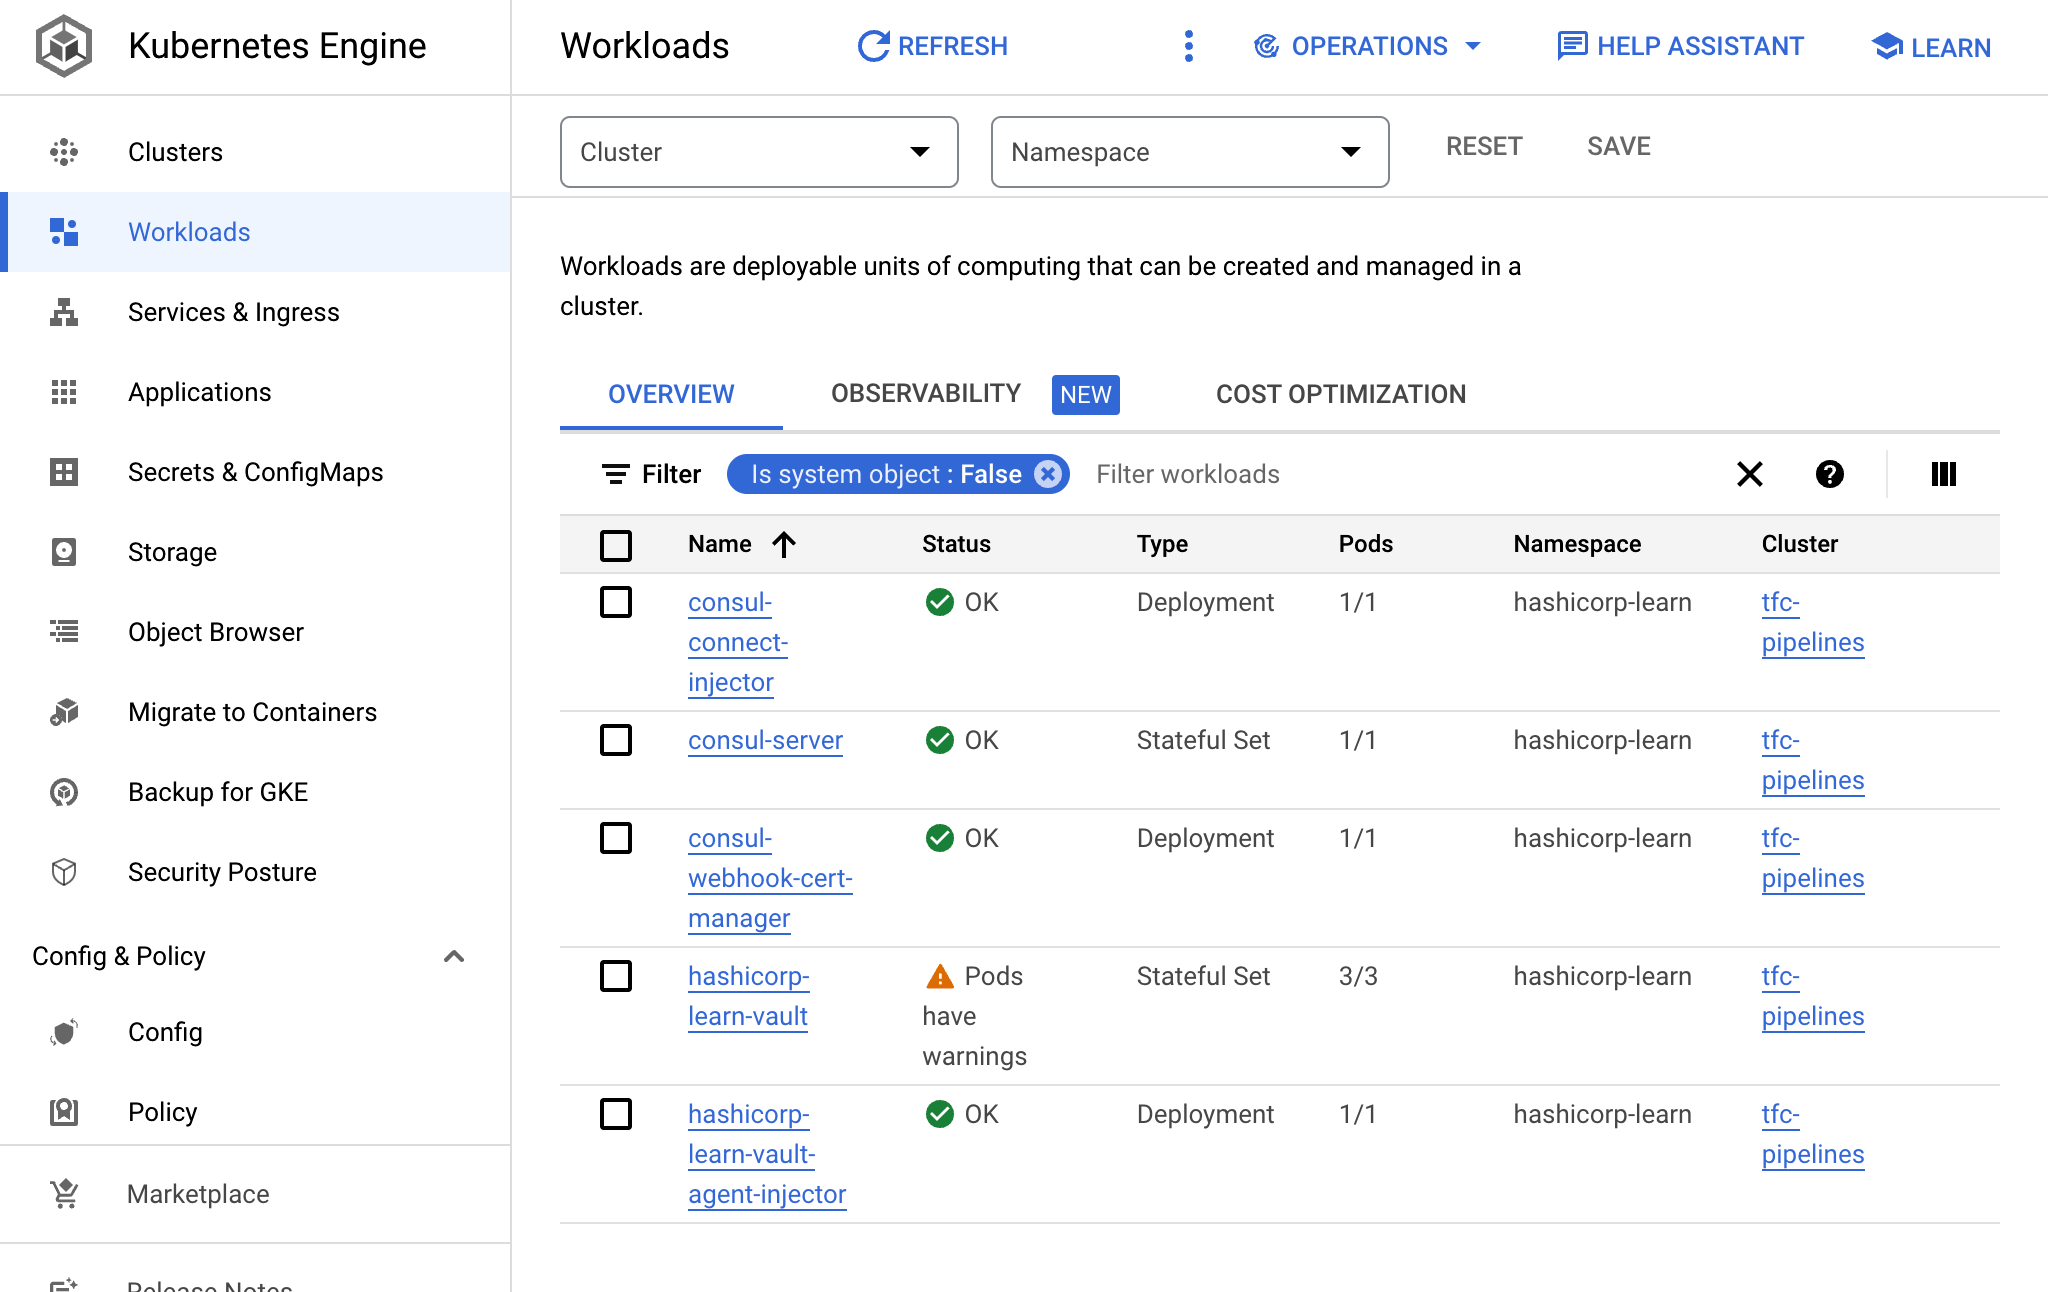 Google Cloud Kubernetes workloads dashboard showing 4 workloads — consul, consul, server, hashicorp-learn-vault, and hashicorp-learn-vault-agent-injector